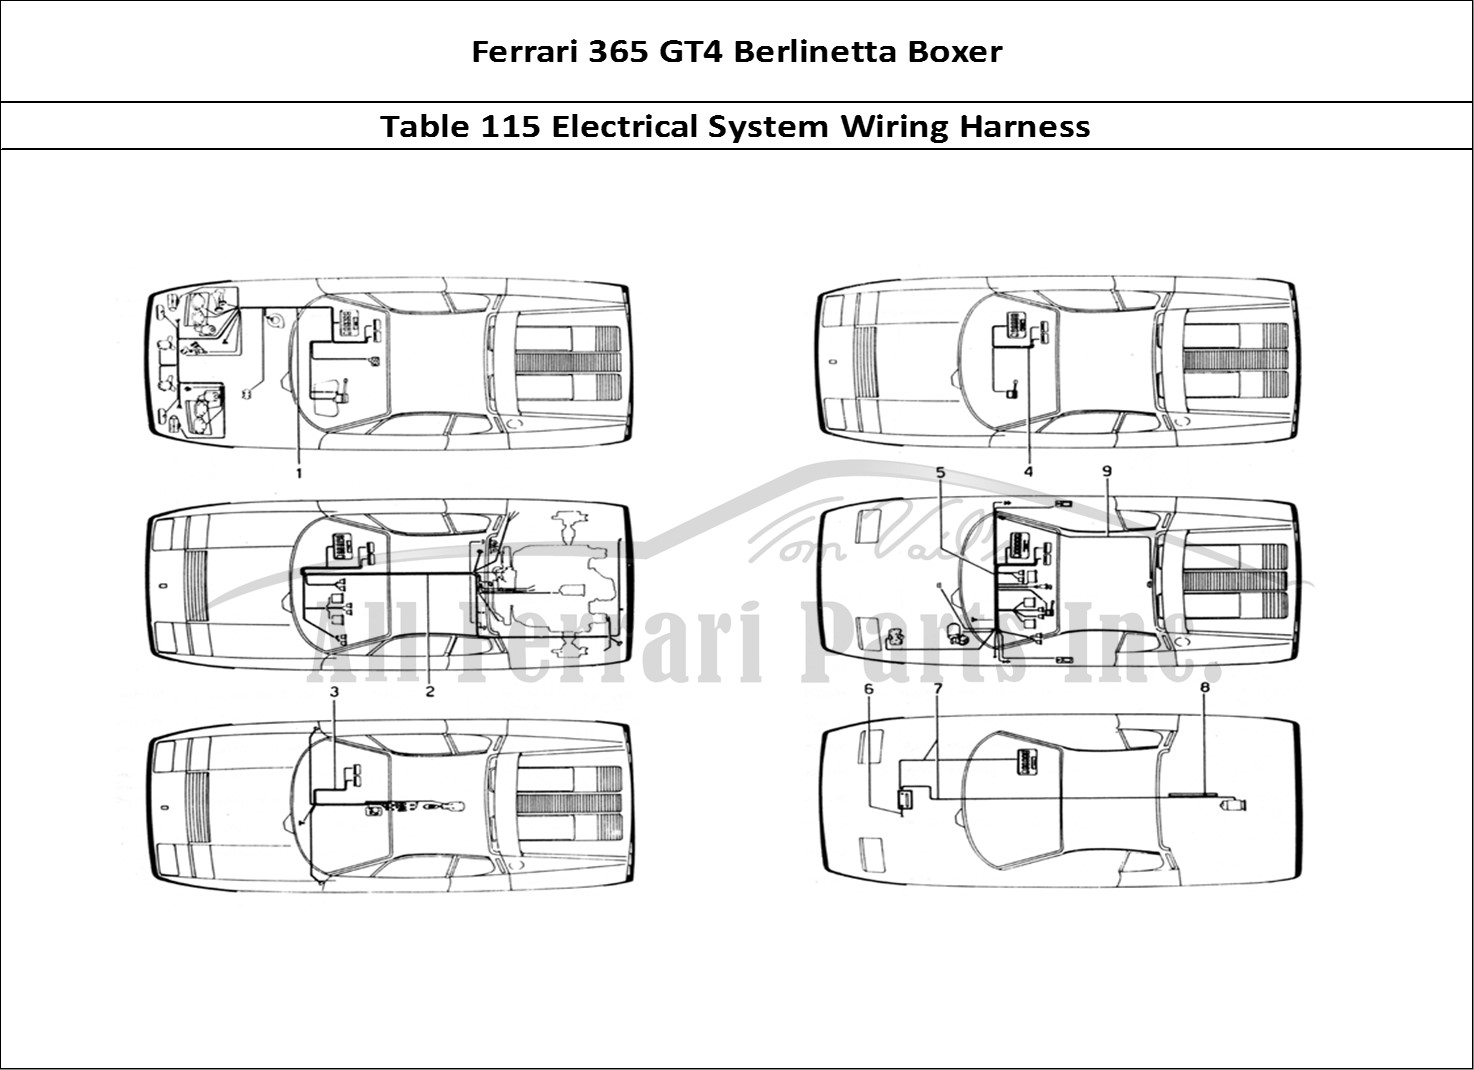 Ferrari Parts Ferrari 365 GT4 Berlinetta Boxer Page 115 Electrical System